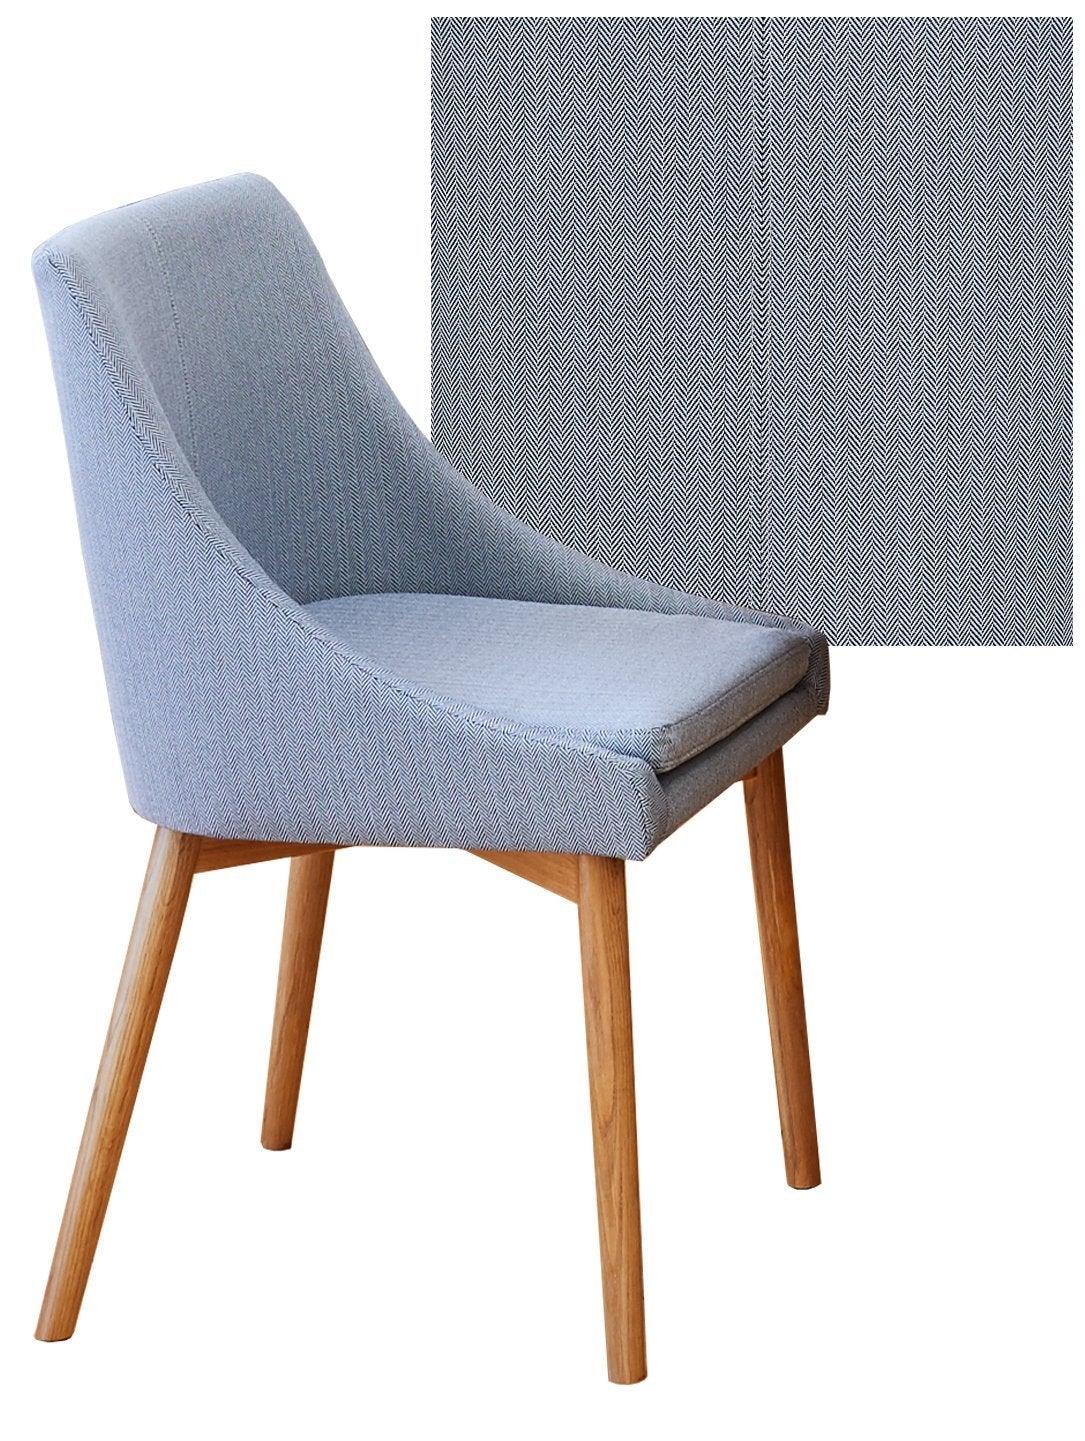 Oak grey chair (pack of two) - crimblefest furniture - image 4